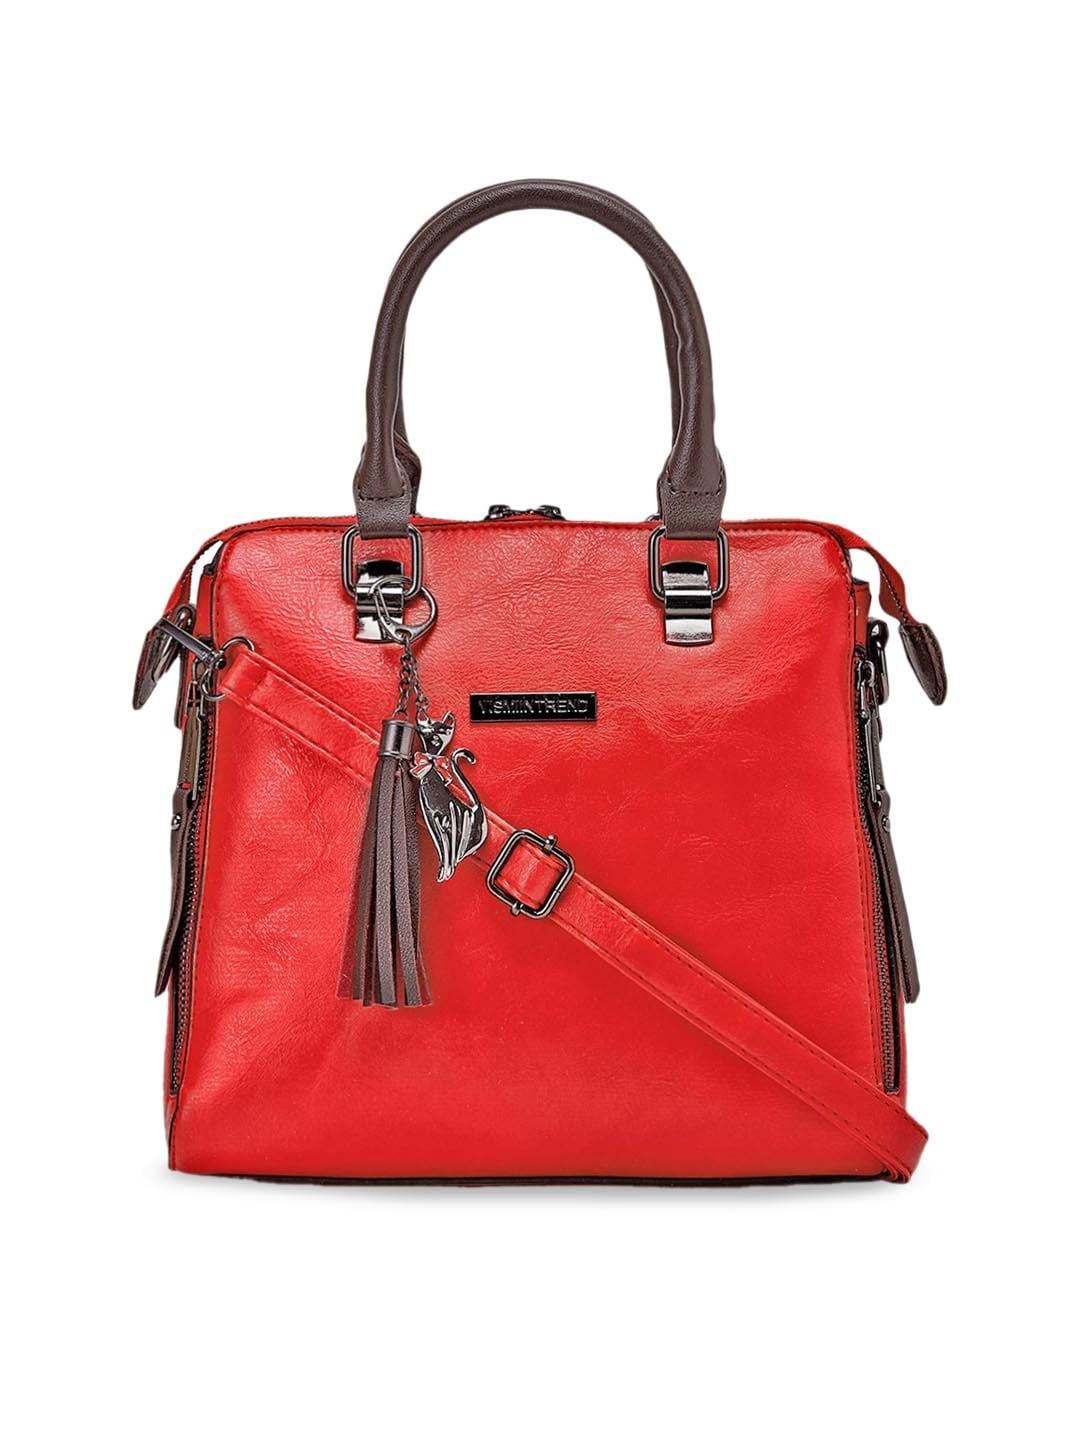 vismiintrend red pu structured handheld bag with tasselled